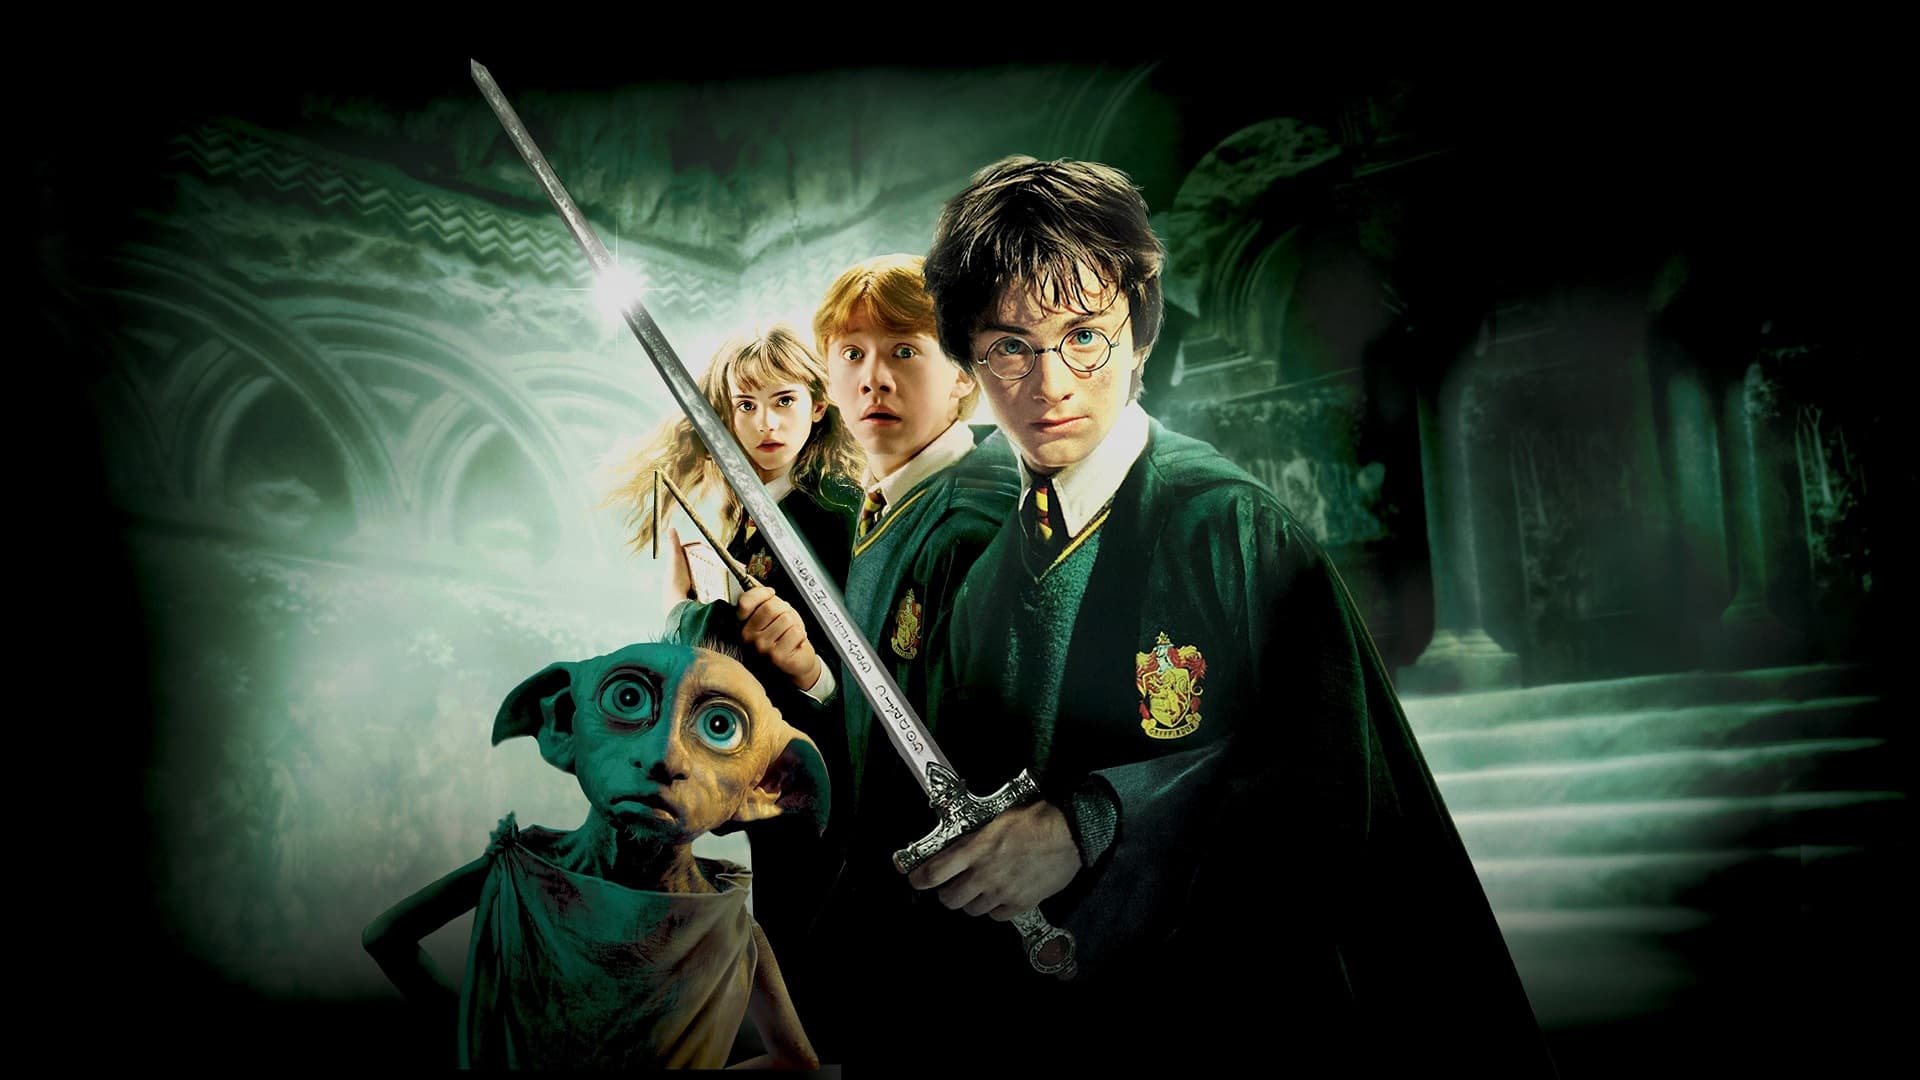 Harry Potter y la camara secreta